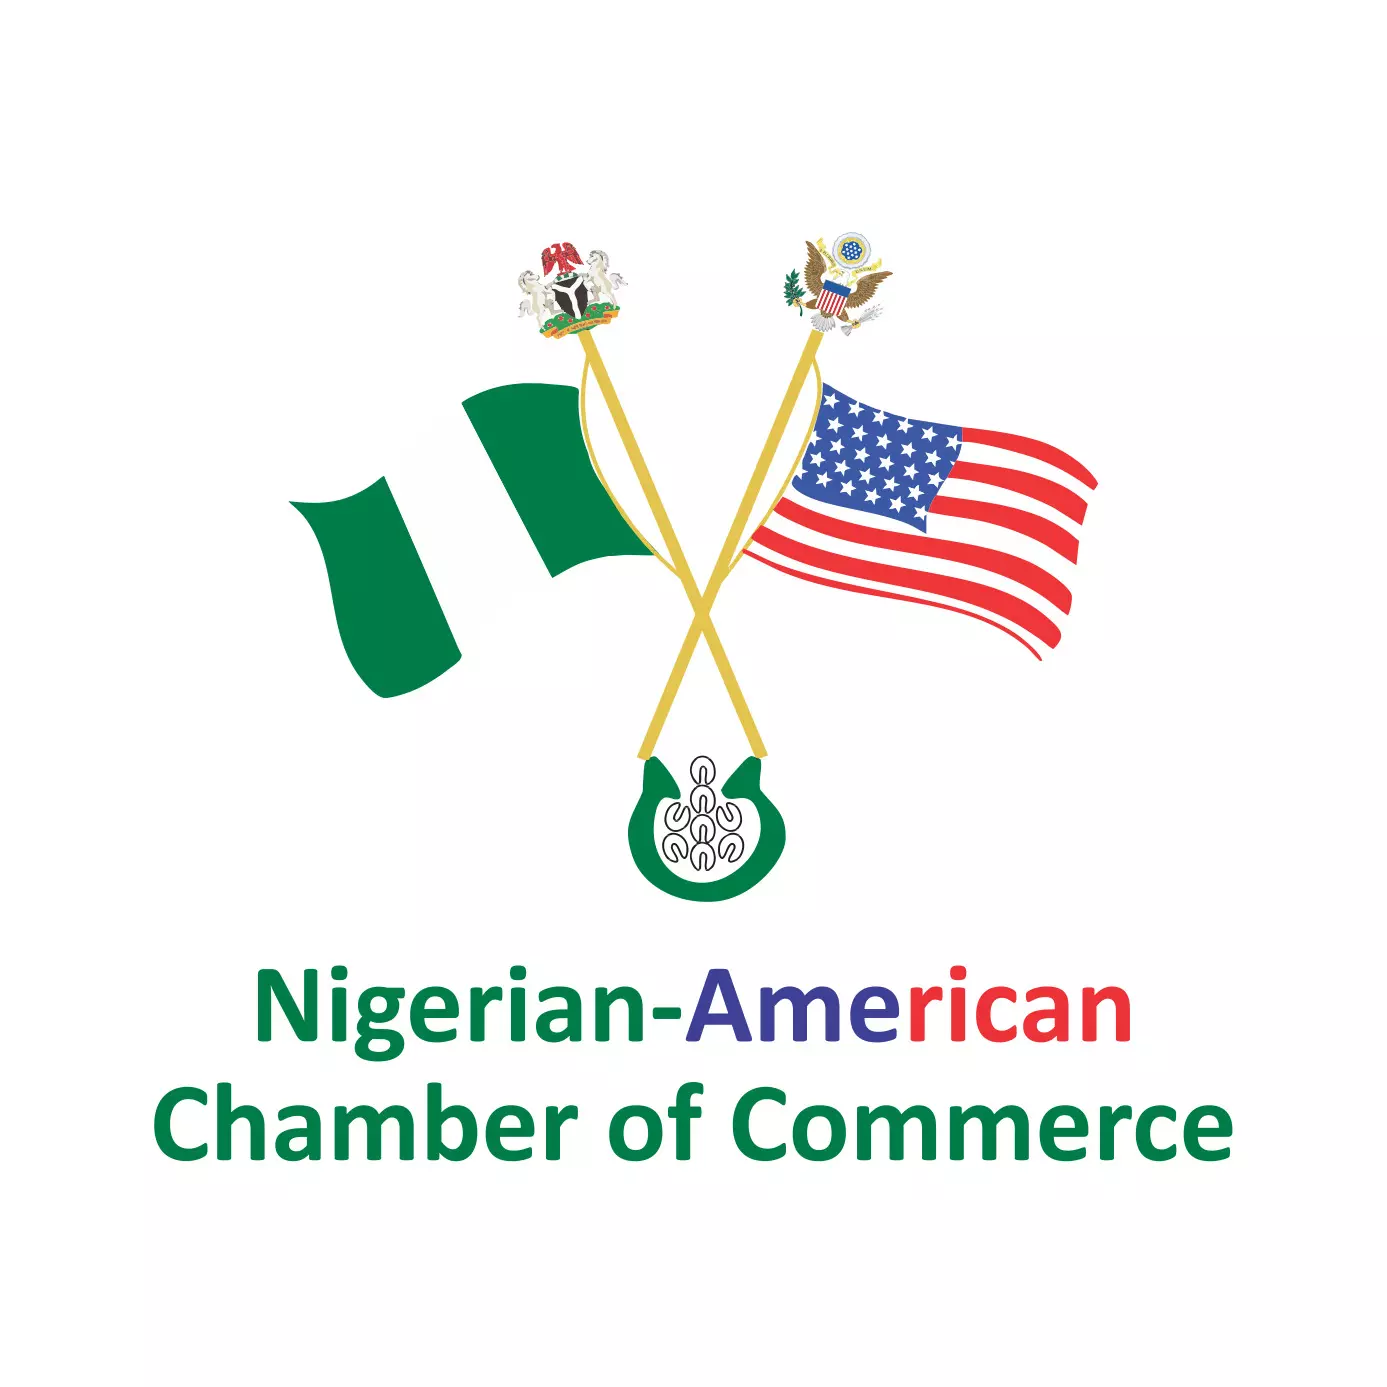 NACC restates commitment to enhance Nigeria, US trade ties